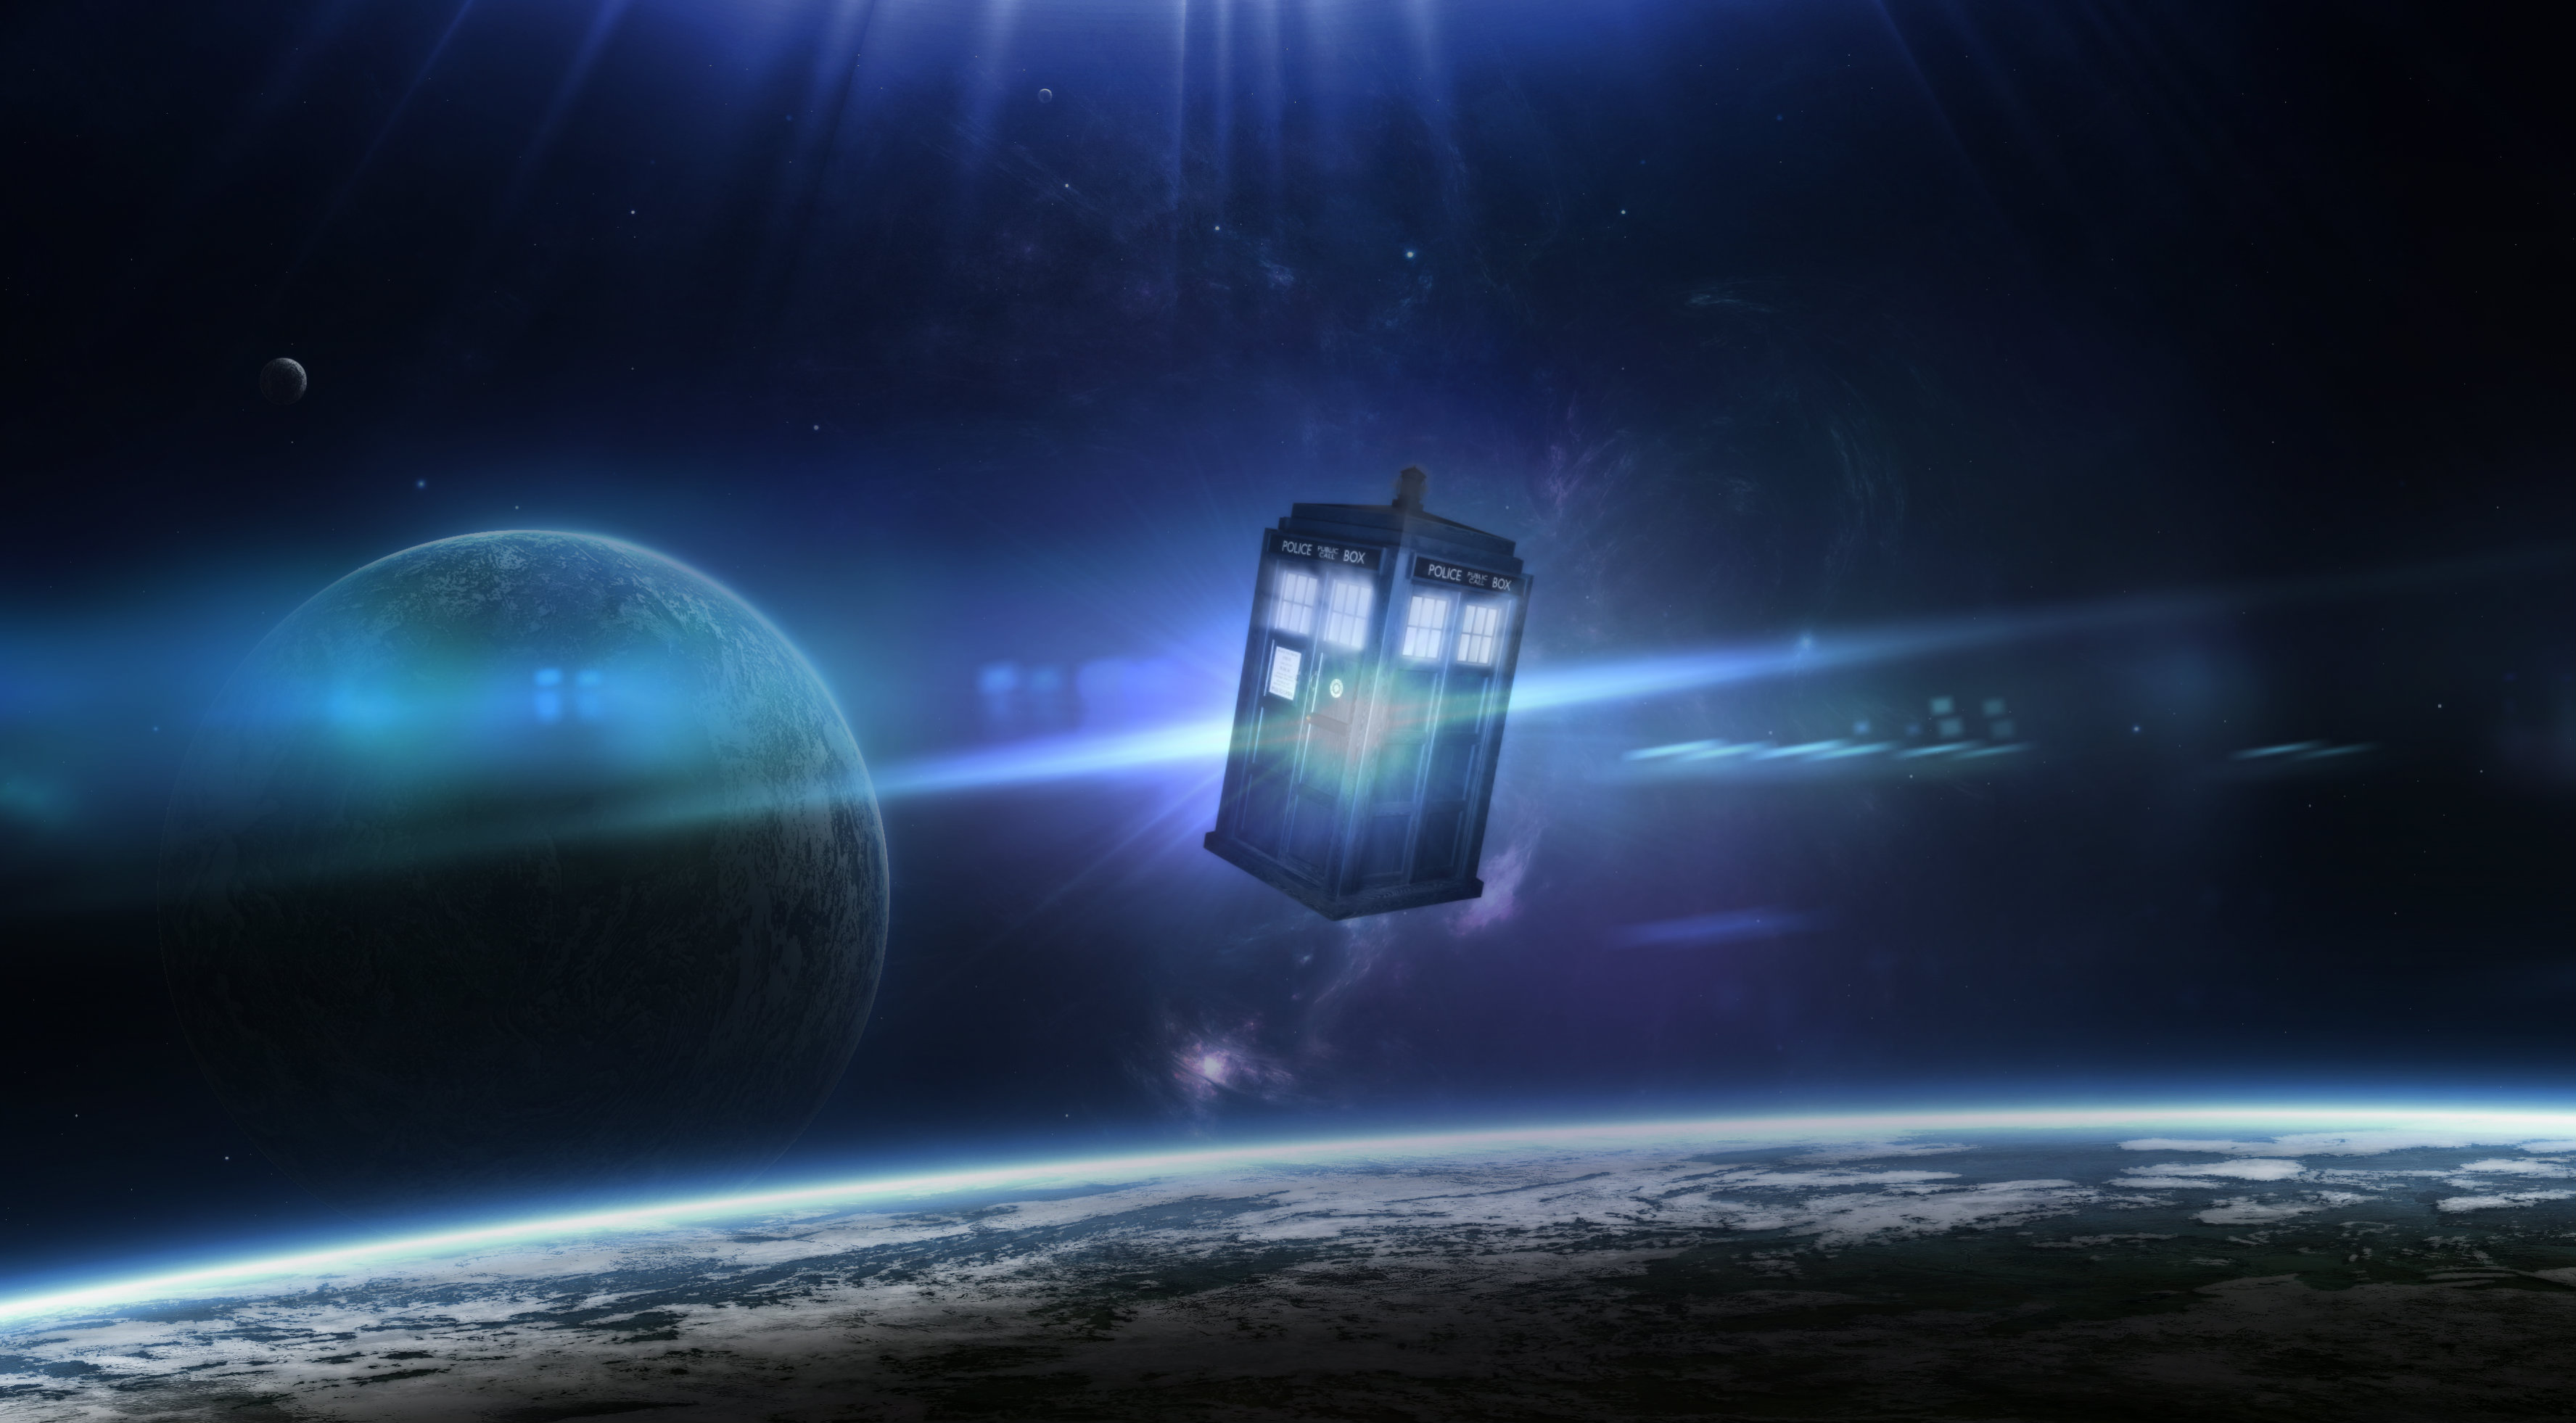 Doctor Who Image On The Digitalimagemakerworld